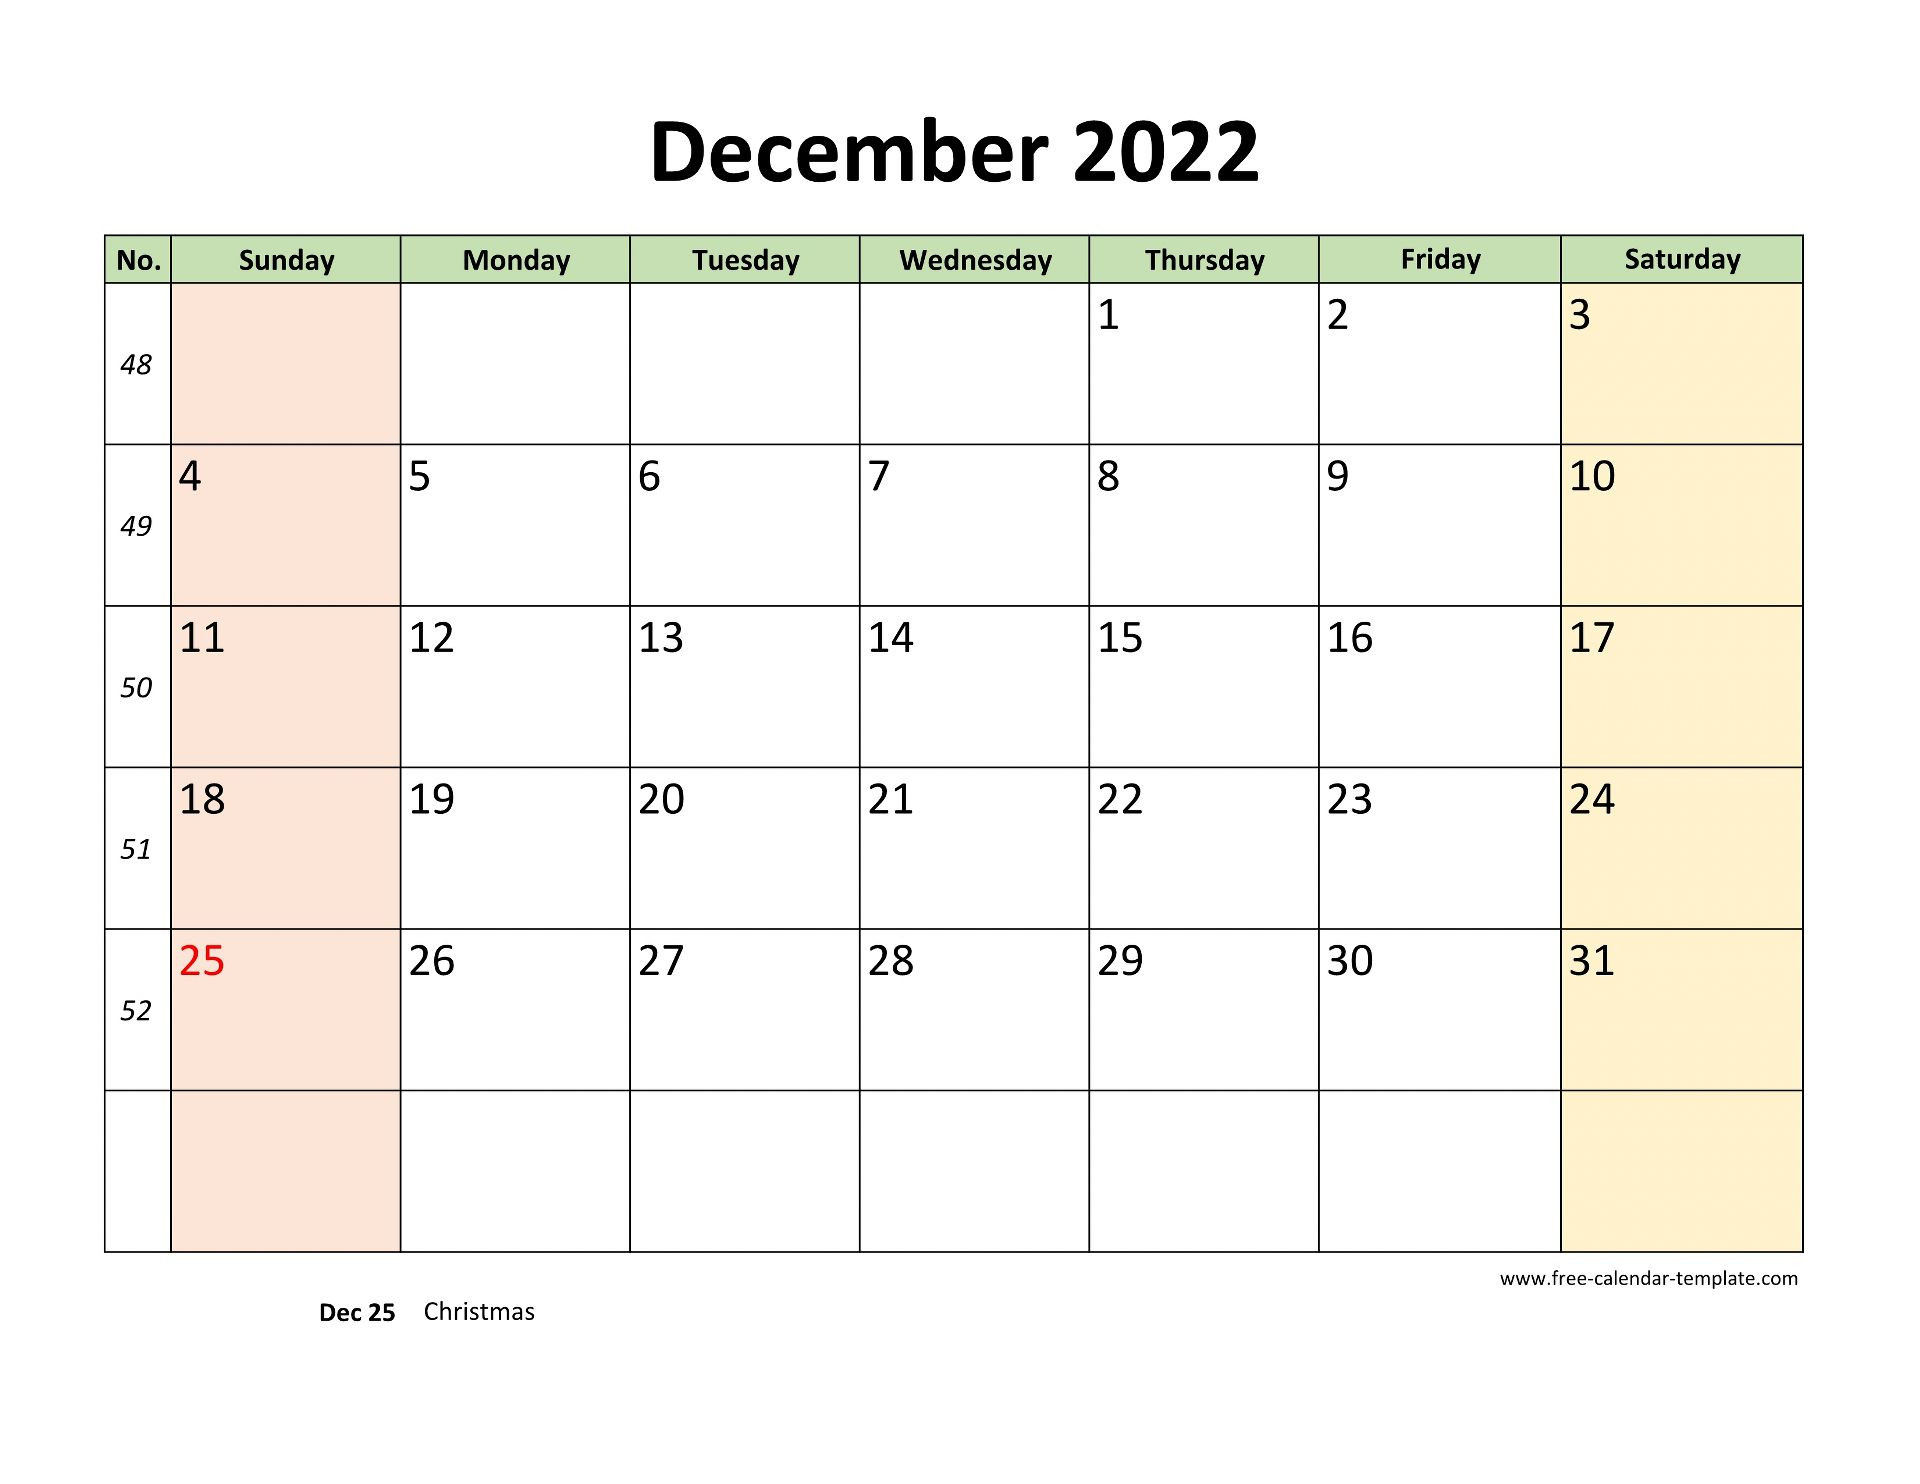 December 2022 Free Calendar Tempplate | Free-Calendar  December Printable Calendar 2022